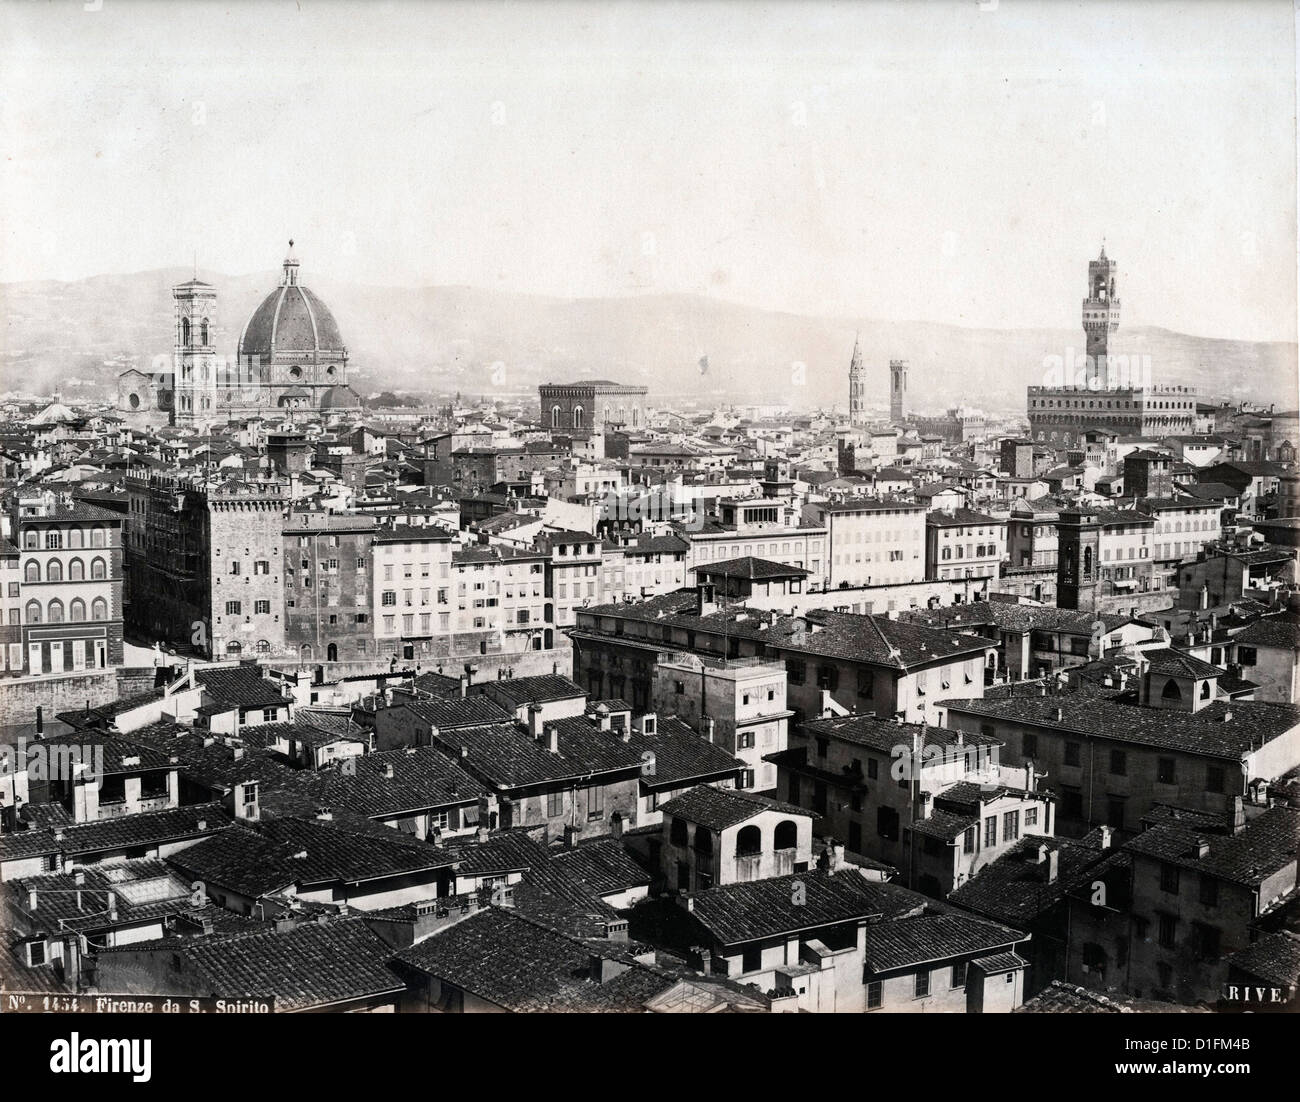 Florence from Basilica di Santo Spirito, ca 1880, by Roberto Rive Stock Photo